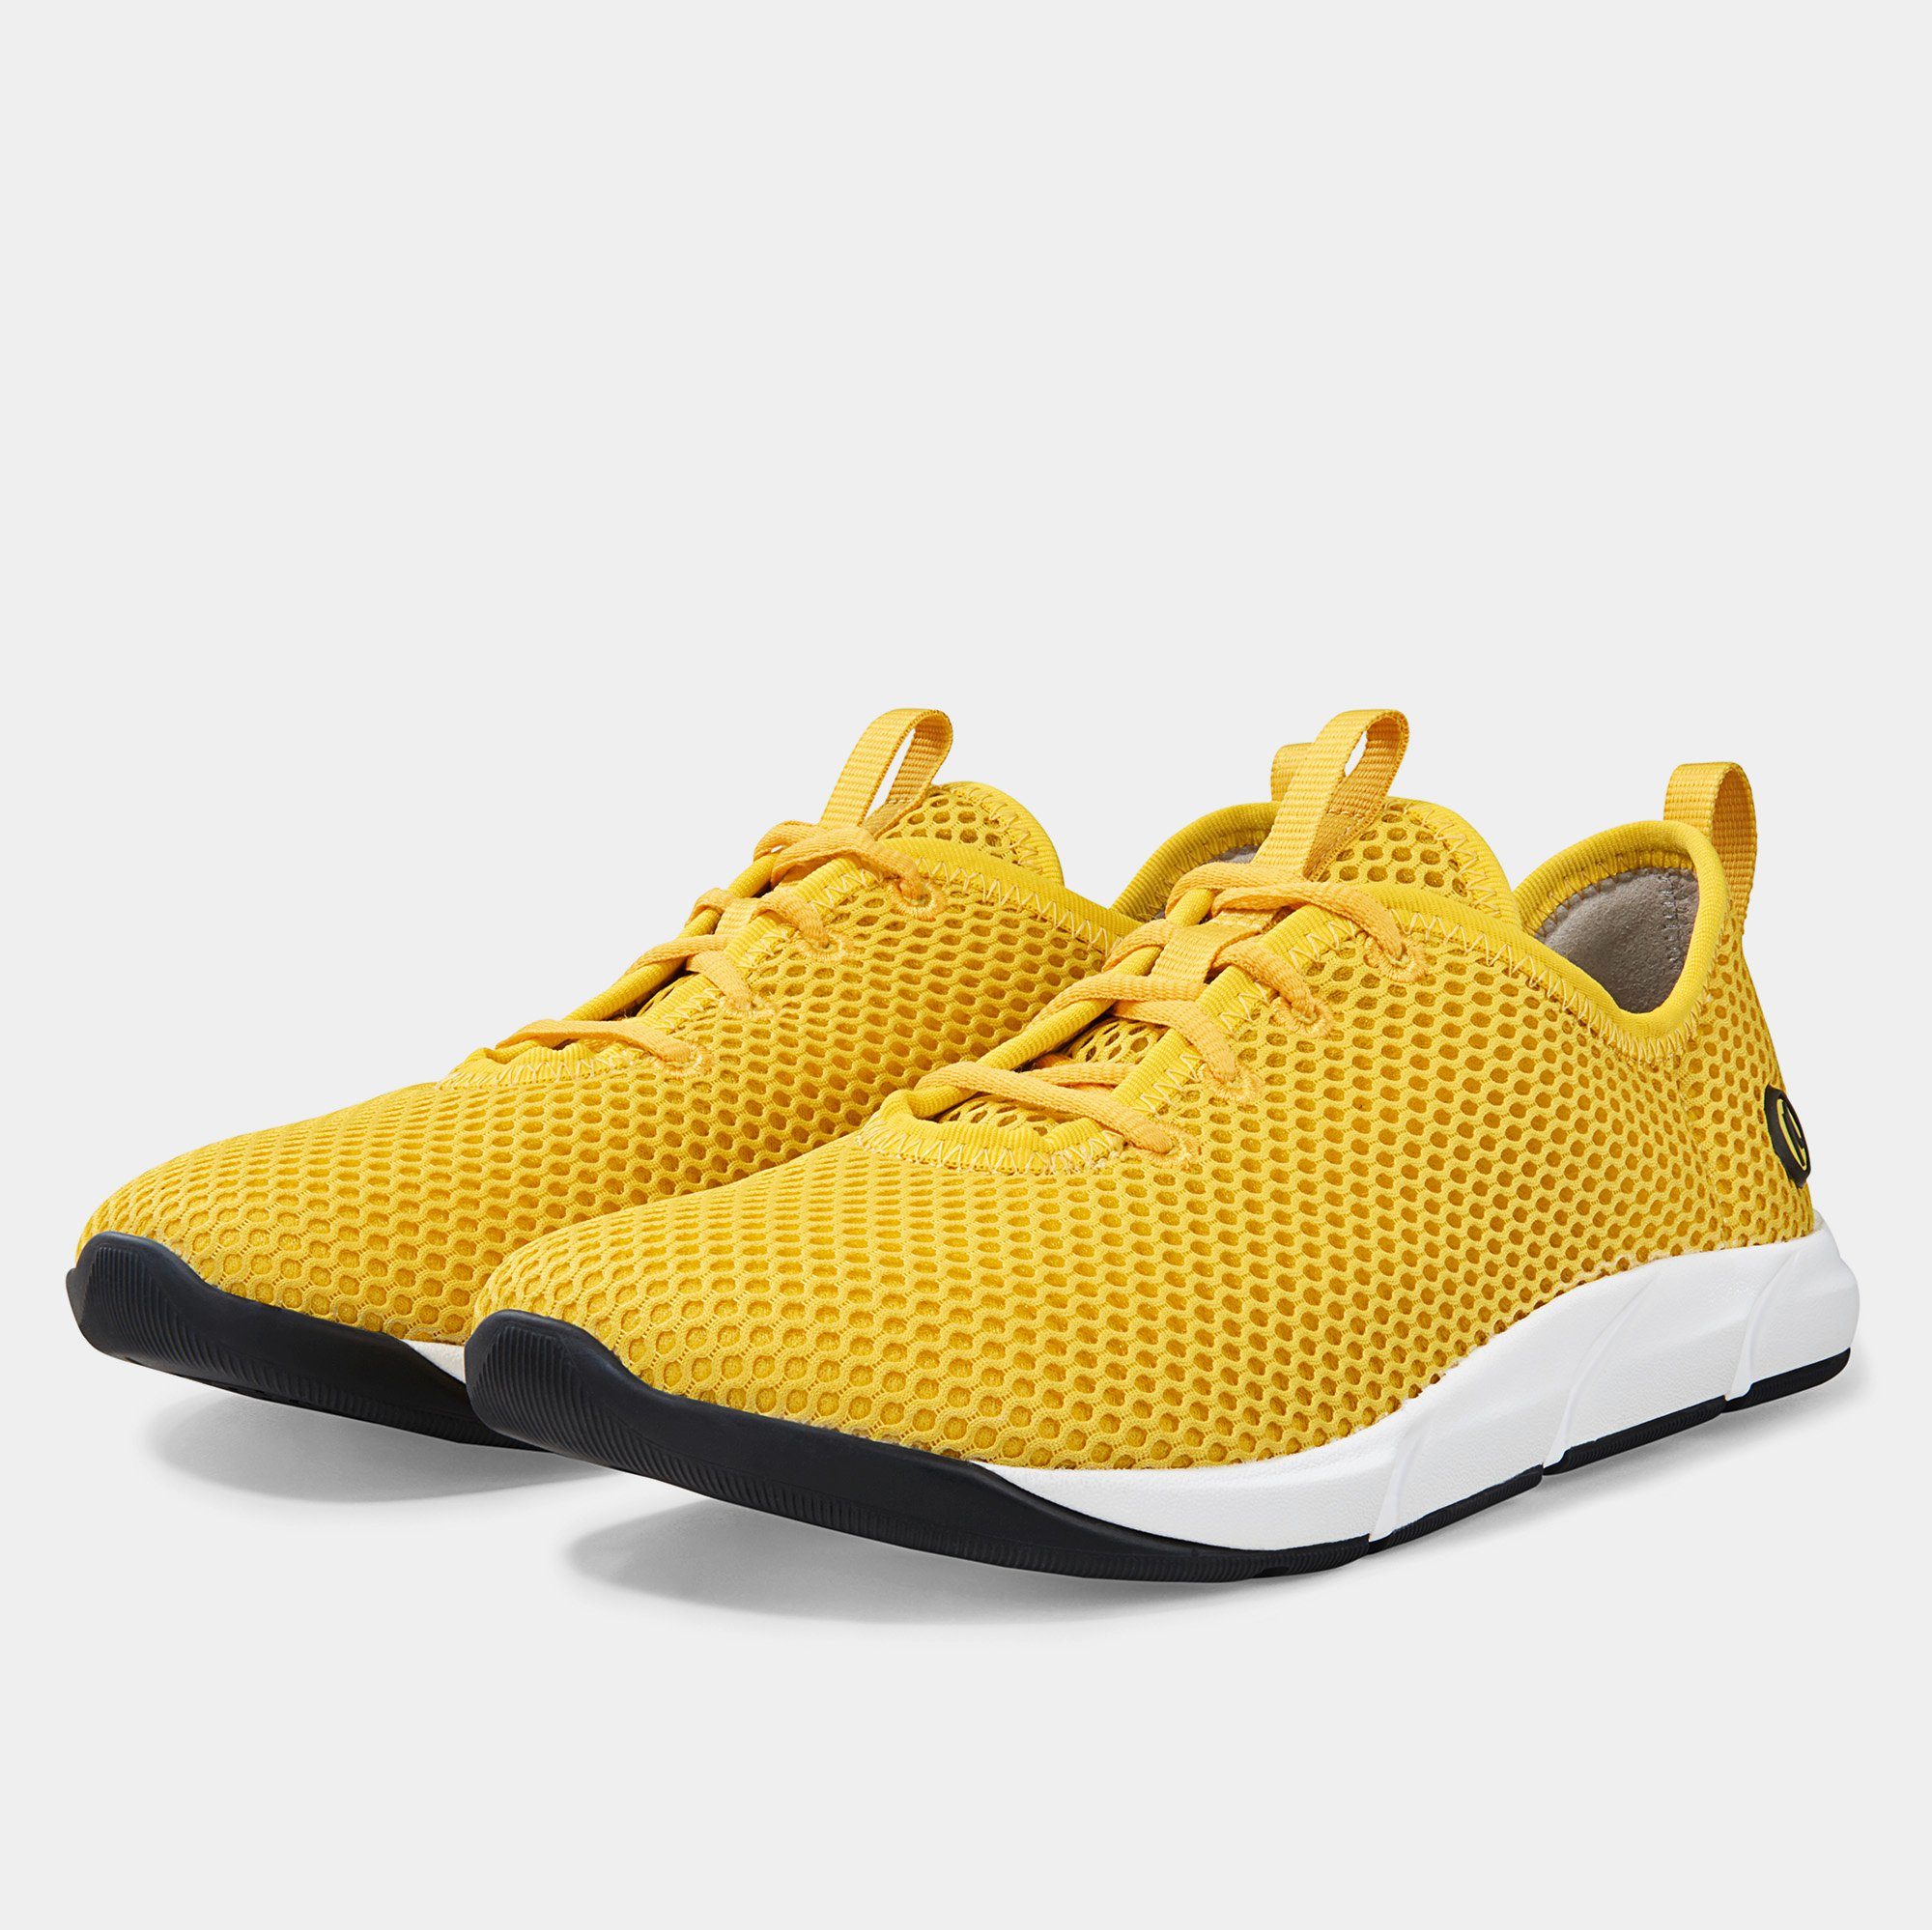 Günstiger Kauf BÄR Damenschuh - Modell motionToes Gelb in der Farbe Sneaker 2.0